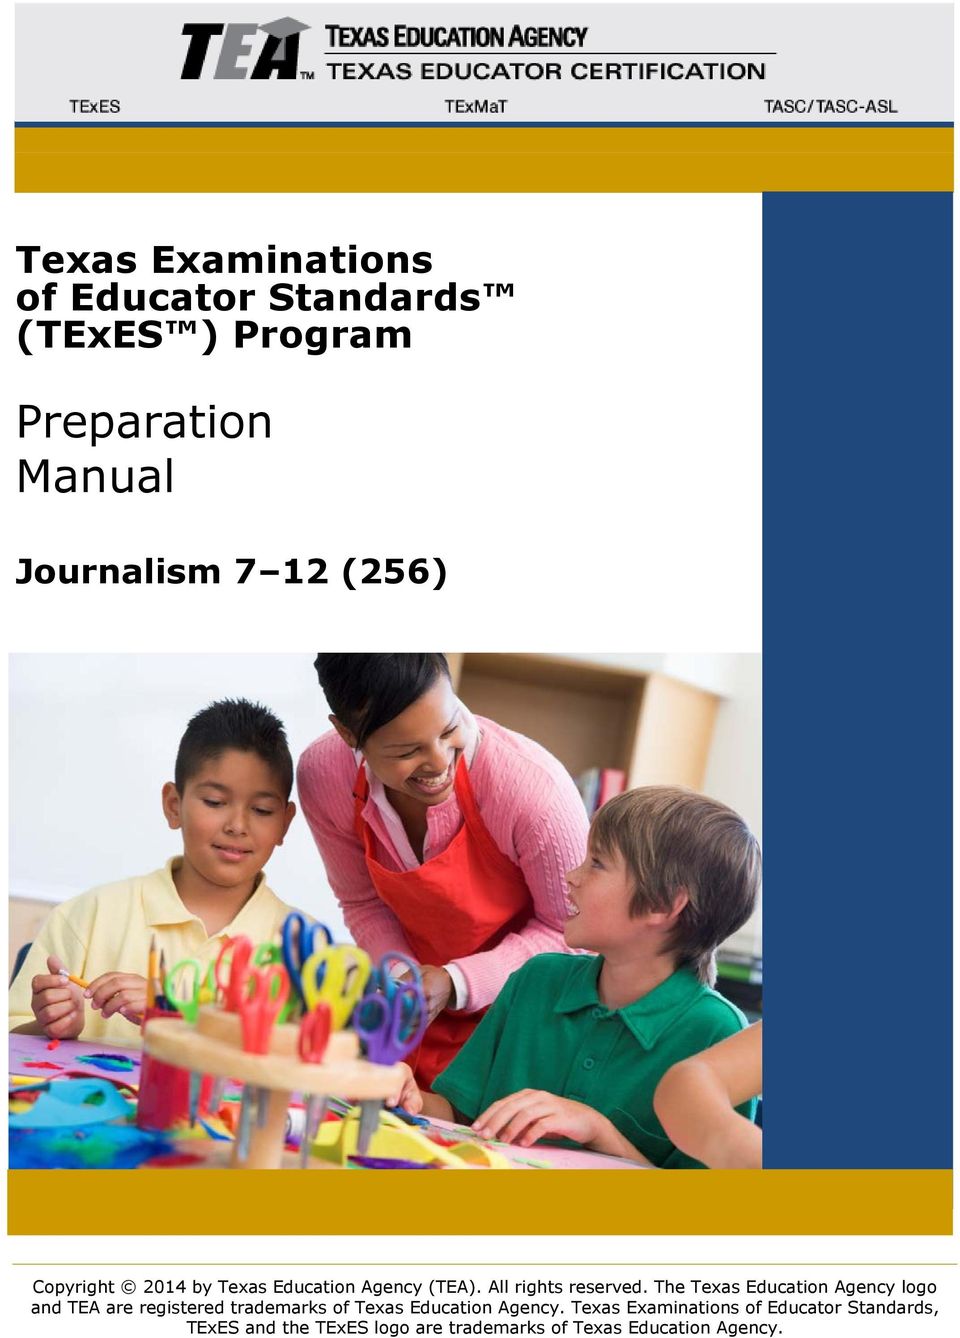 The Texas Education Agency logo and TEA are registered trademarks of Texas Education Agency.